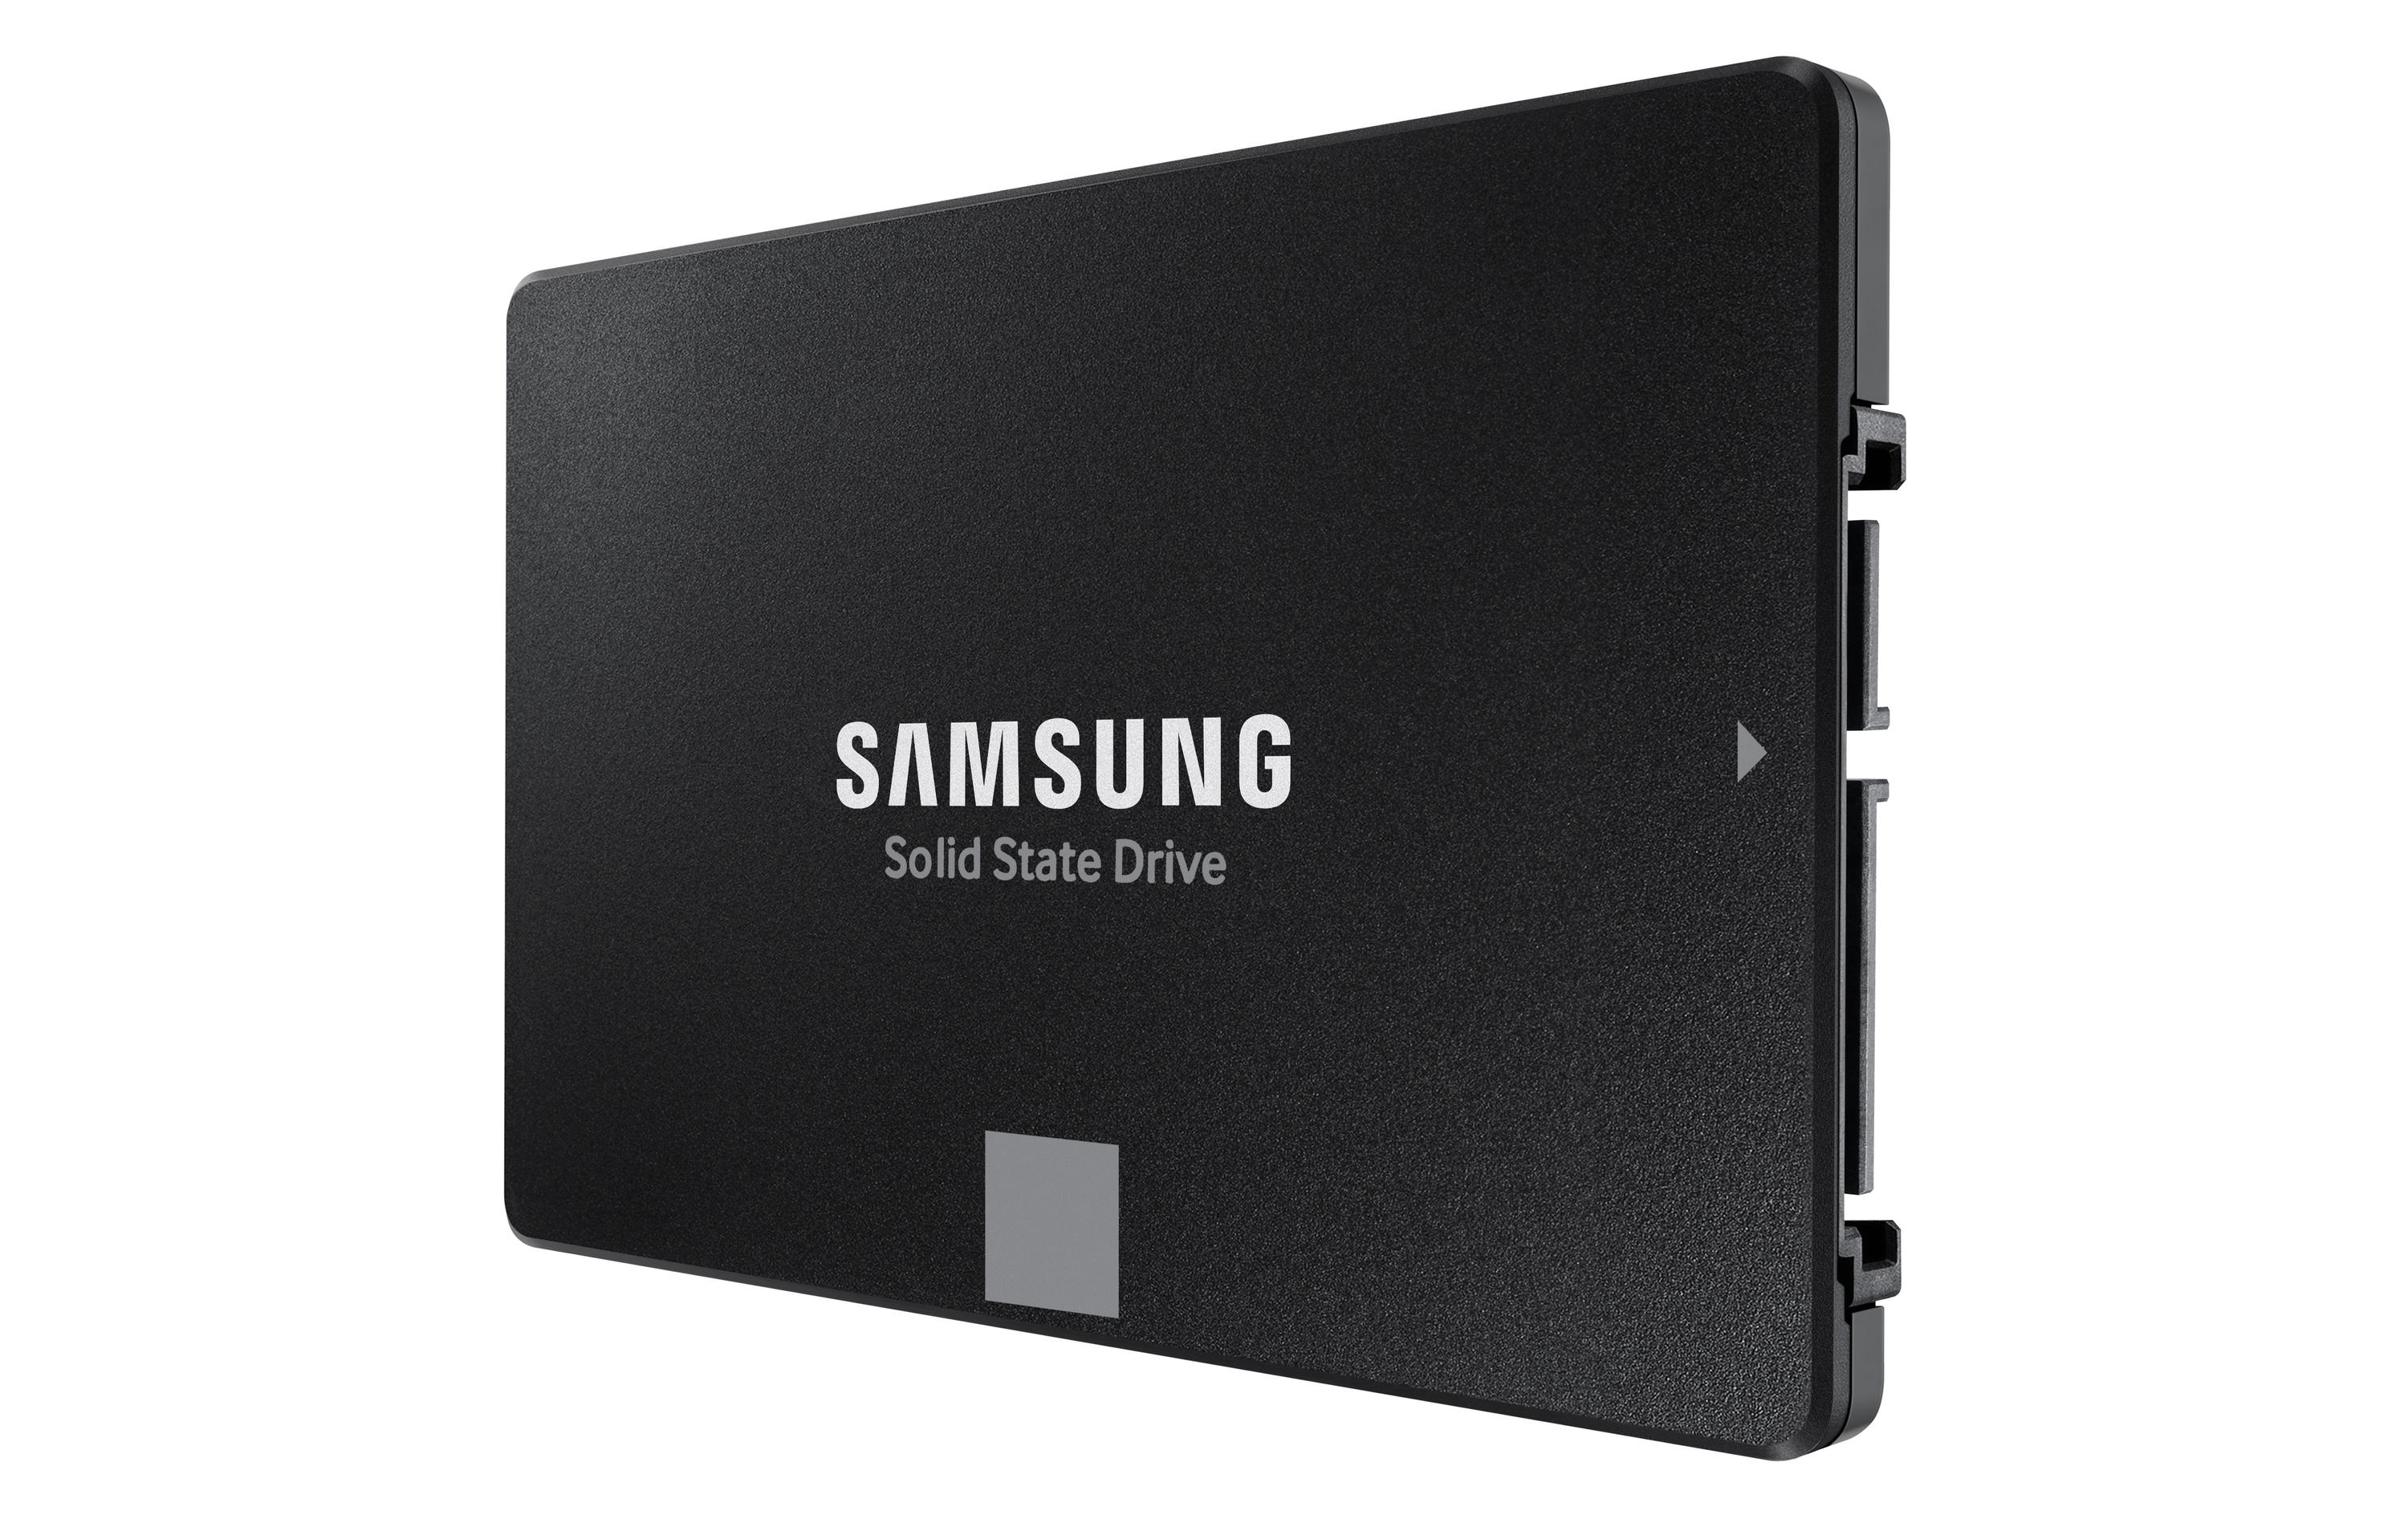 Samsung EVO 870 SSD 2 TB